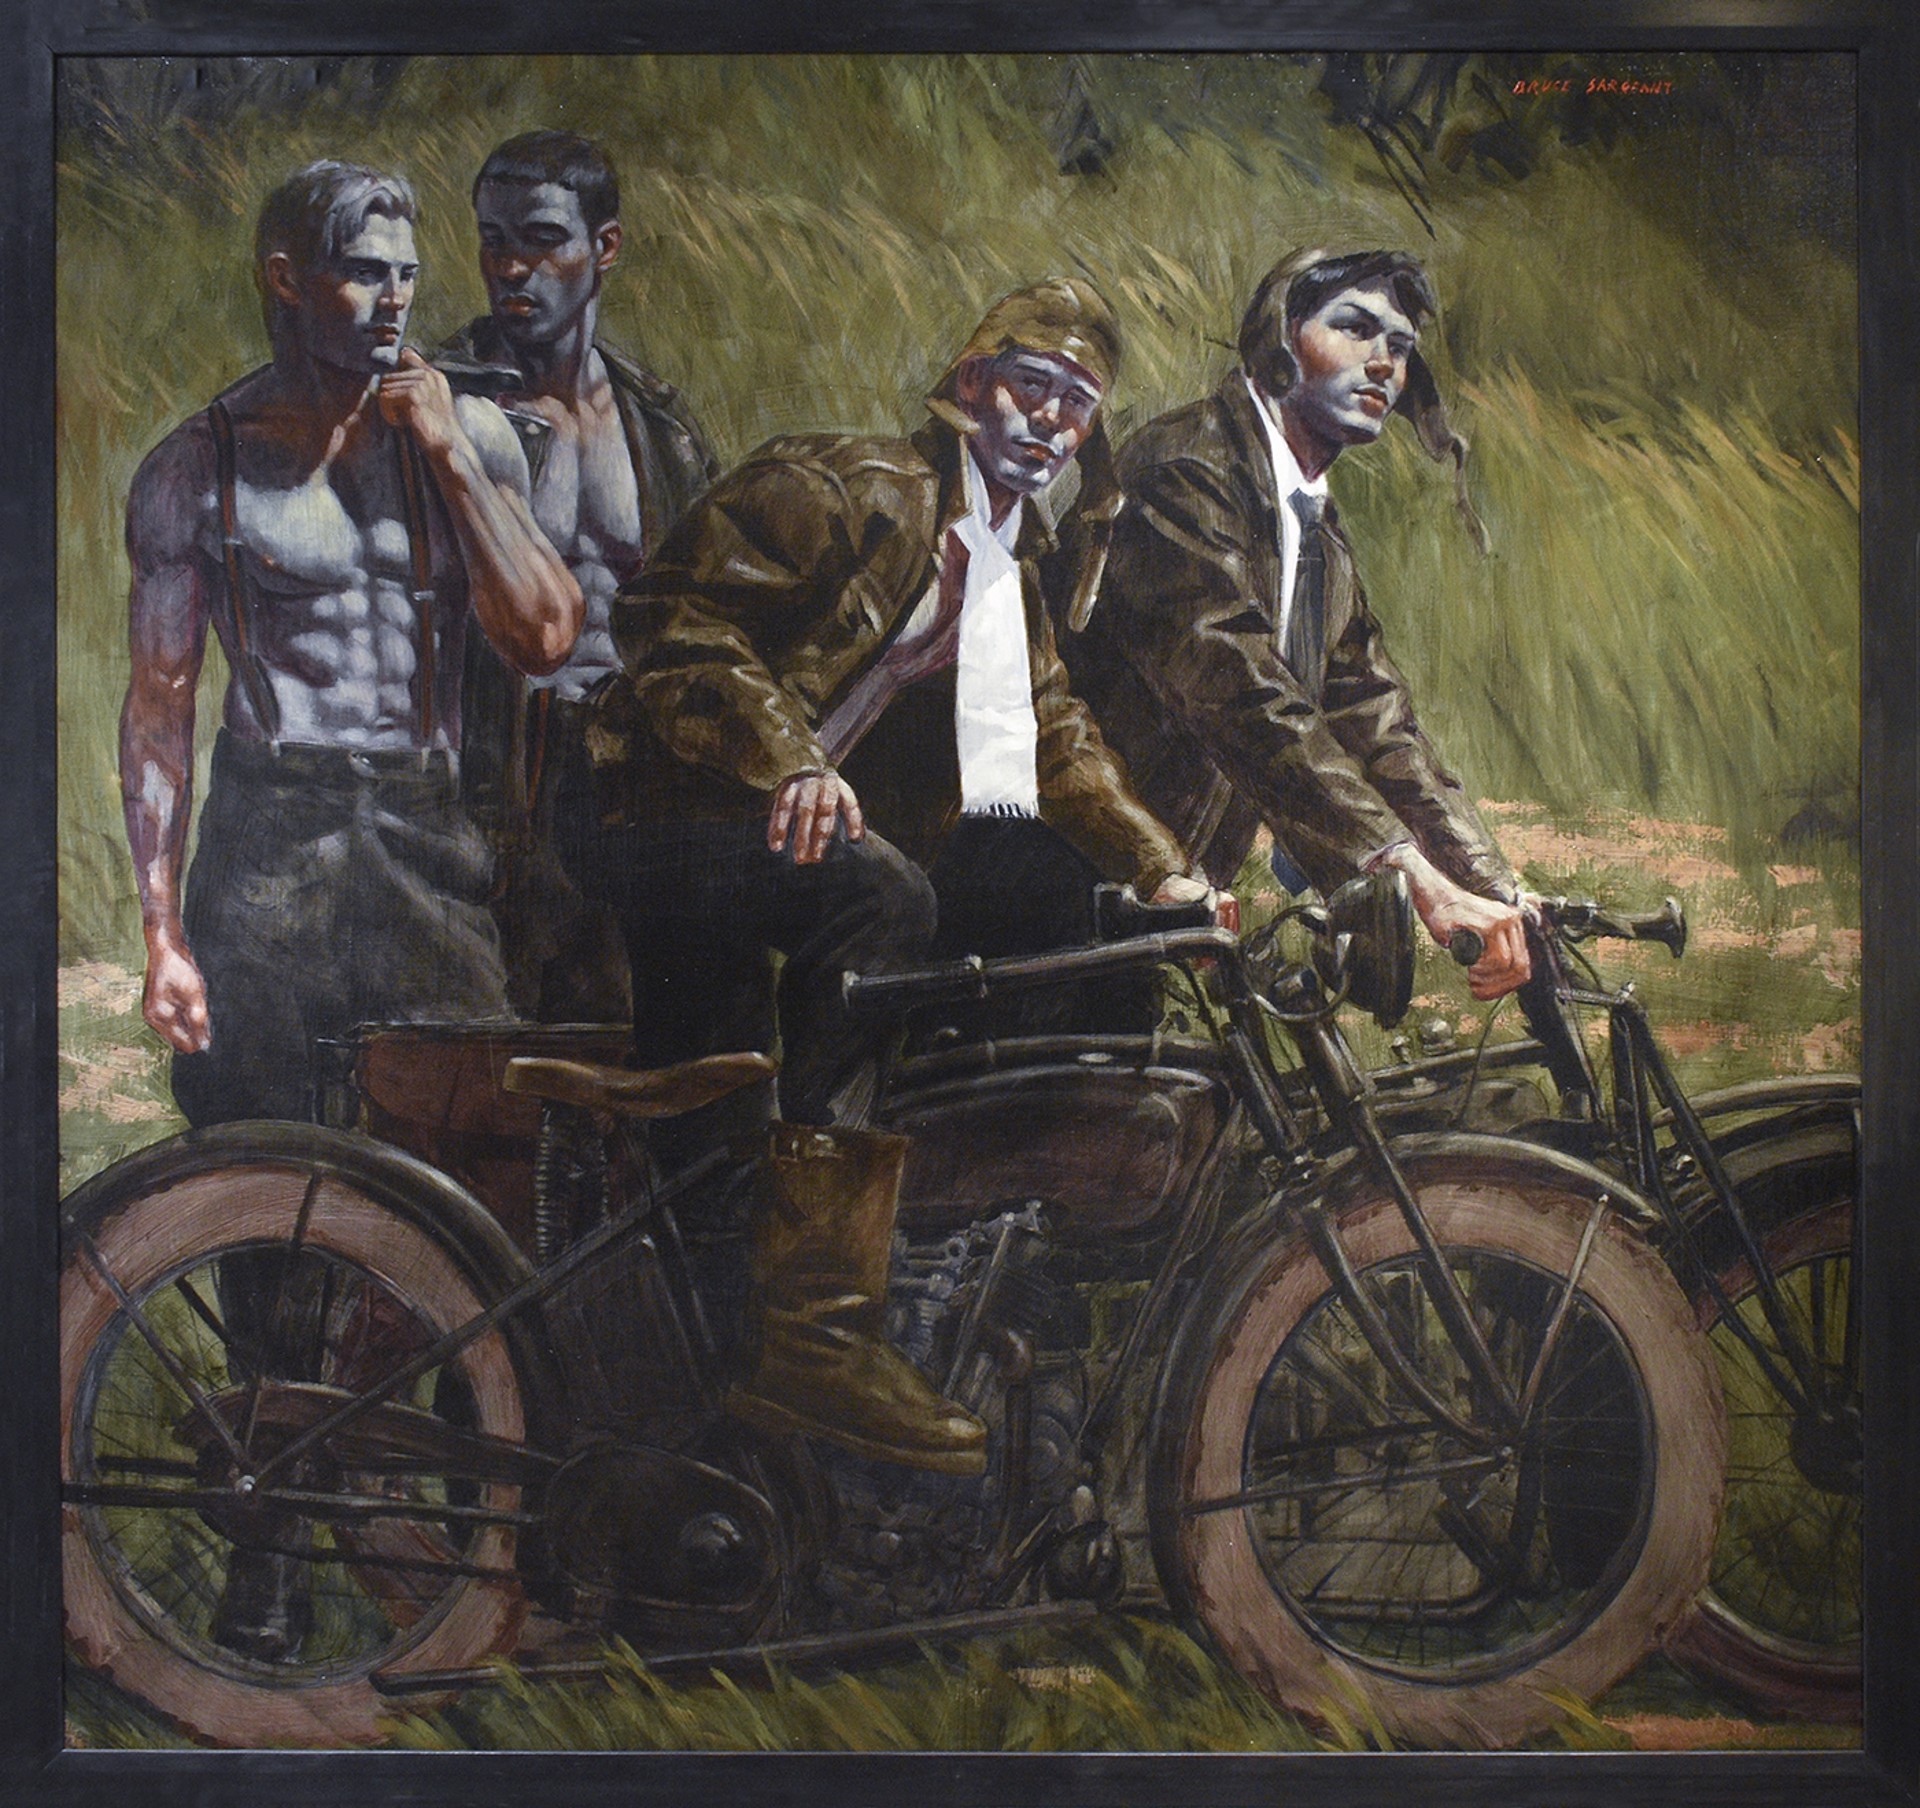 Men and Motorcycles I by Mark Beard